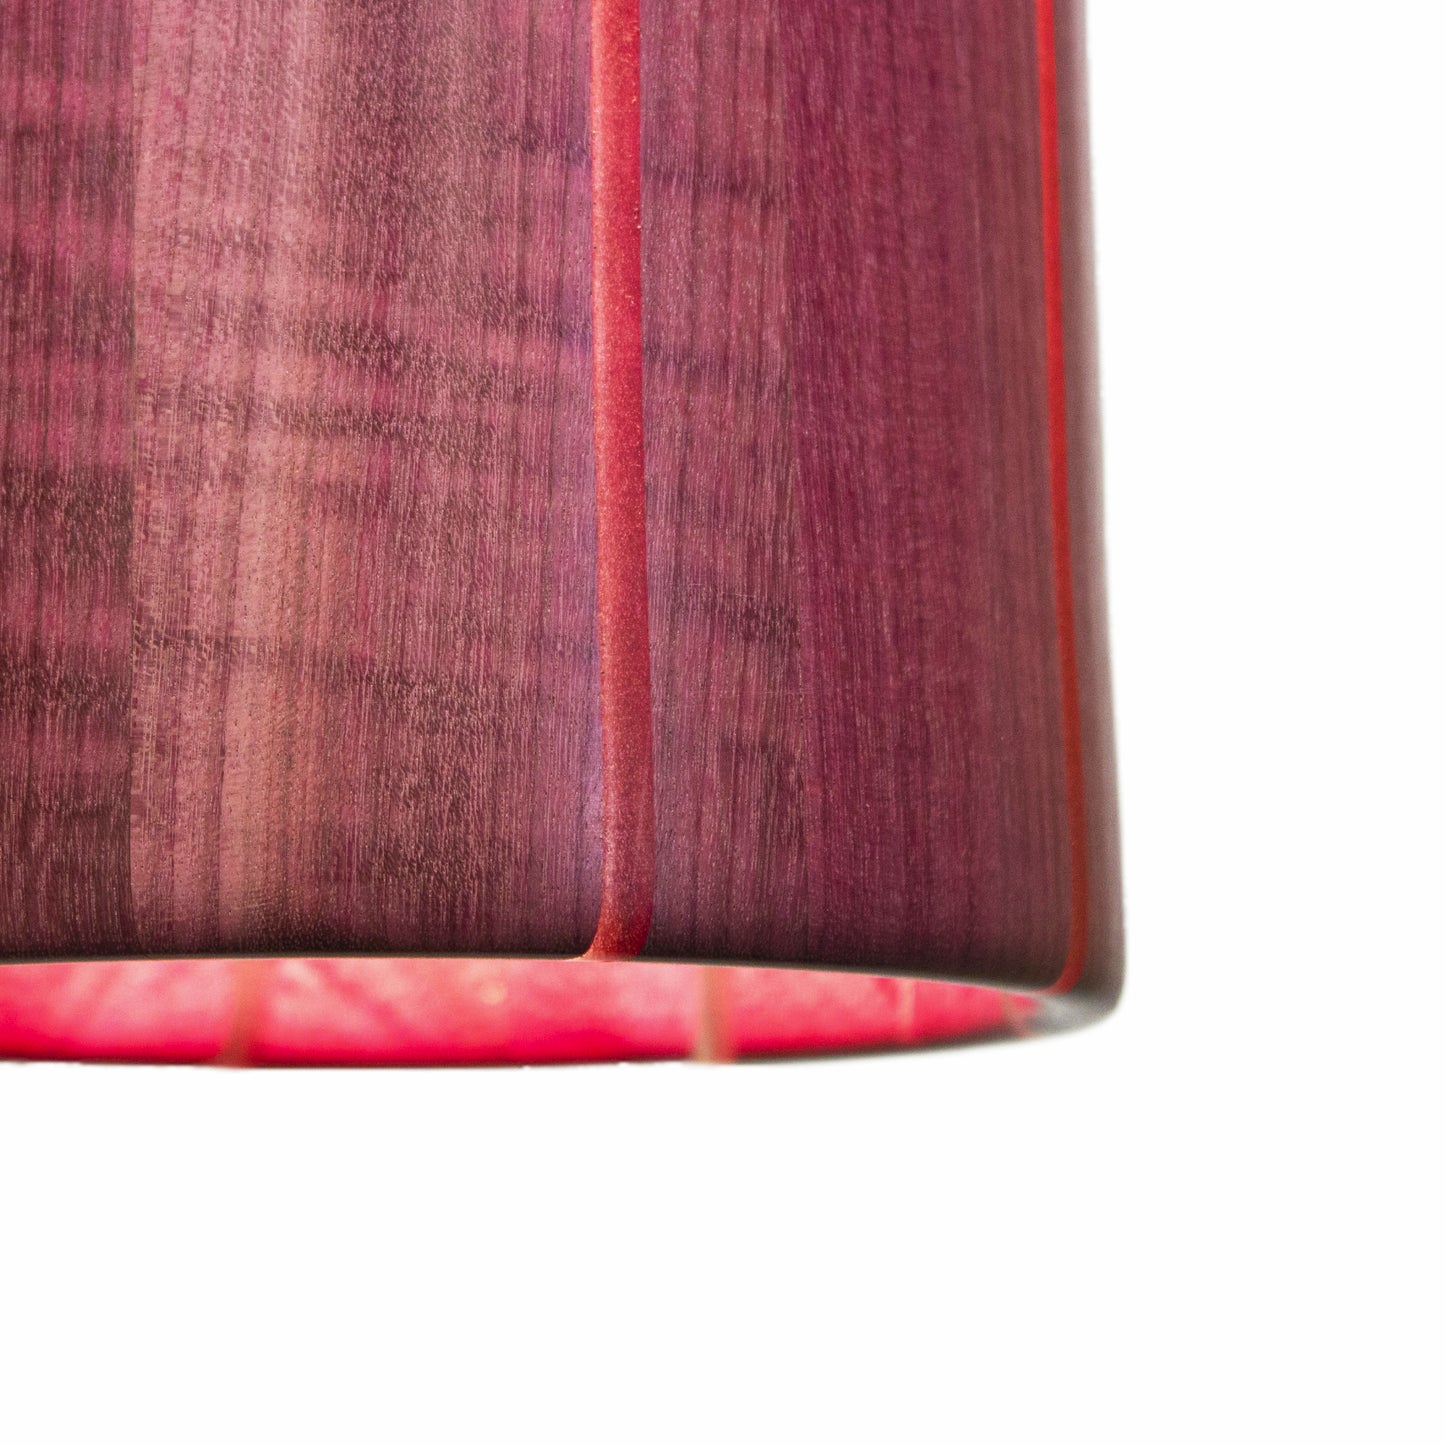 Quarter image of Strake Studio Latimore Pendant Lamp made from Purpleheart exotic wood.